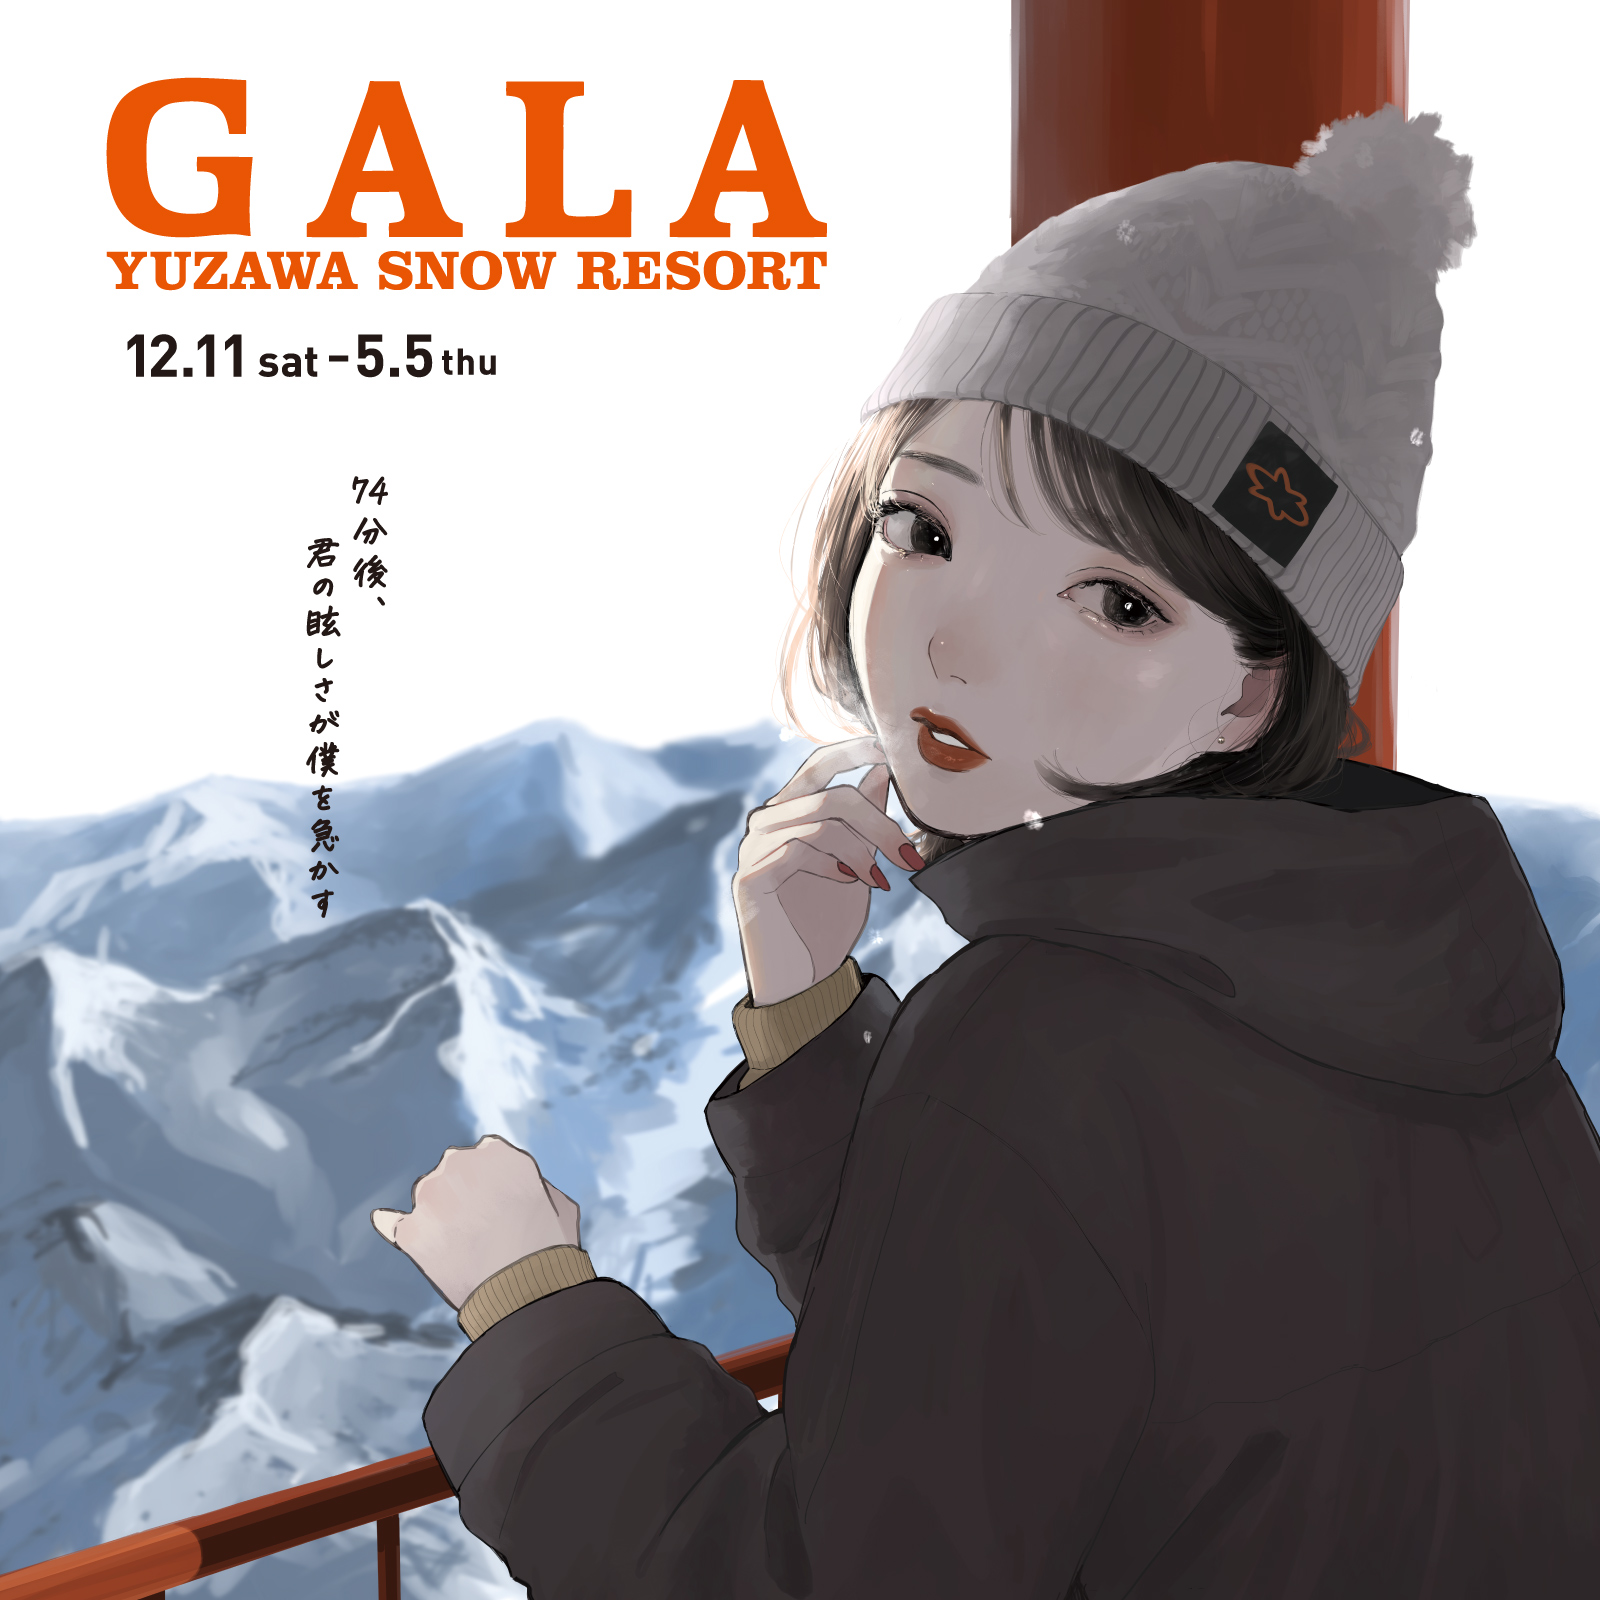 Galaポスター紹介 描いてくれたのは今話題のイラストレーター ガーラ湯沢スキー場 新潟県湯沢町 Gala Yuzawa